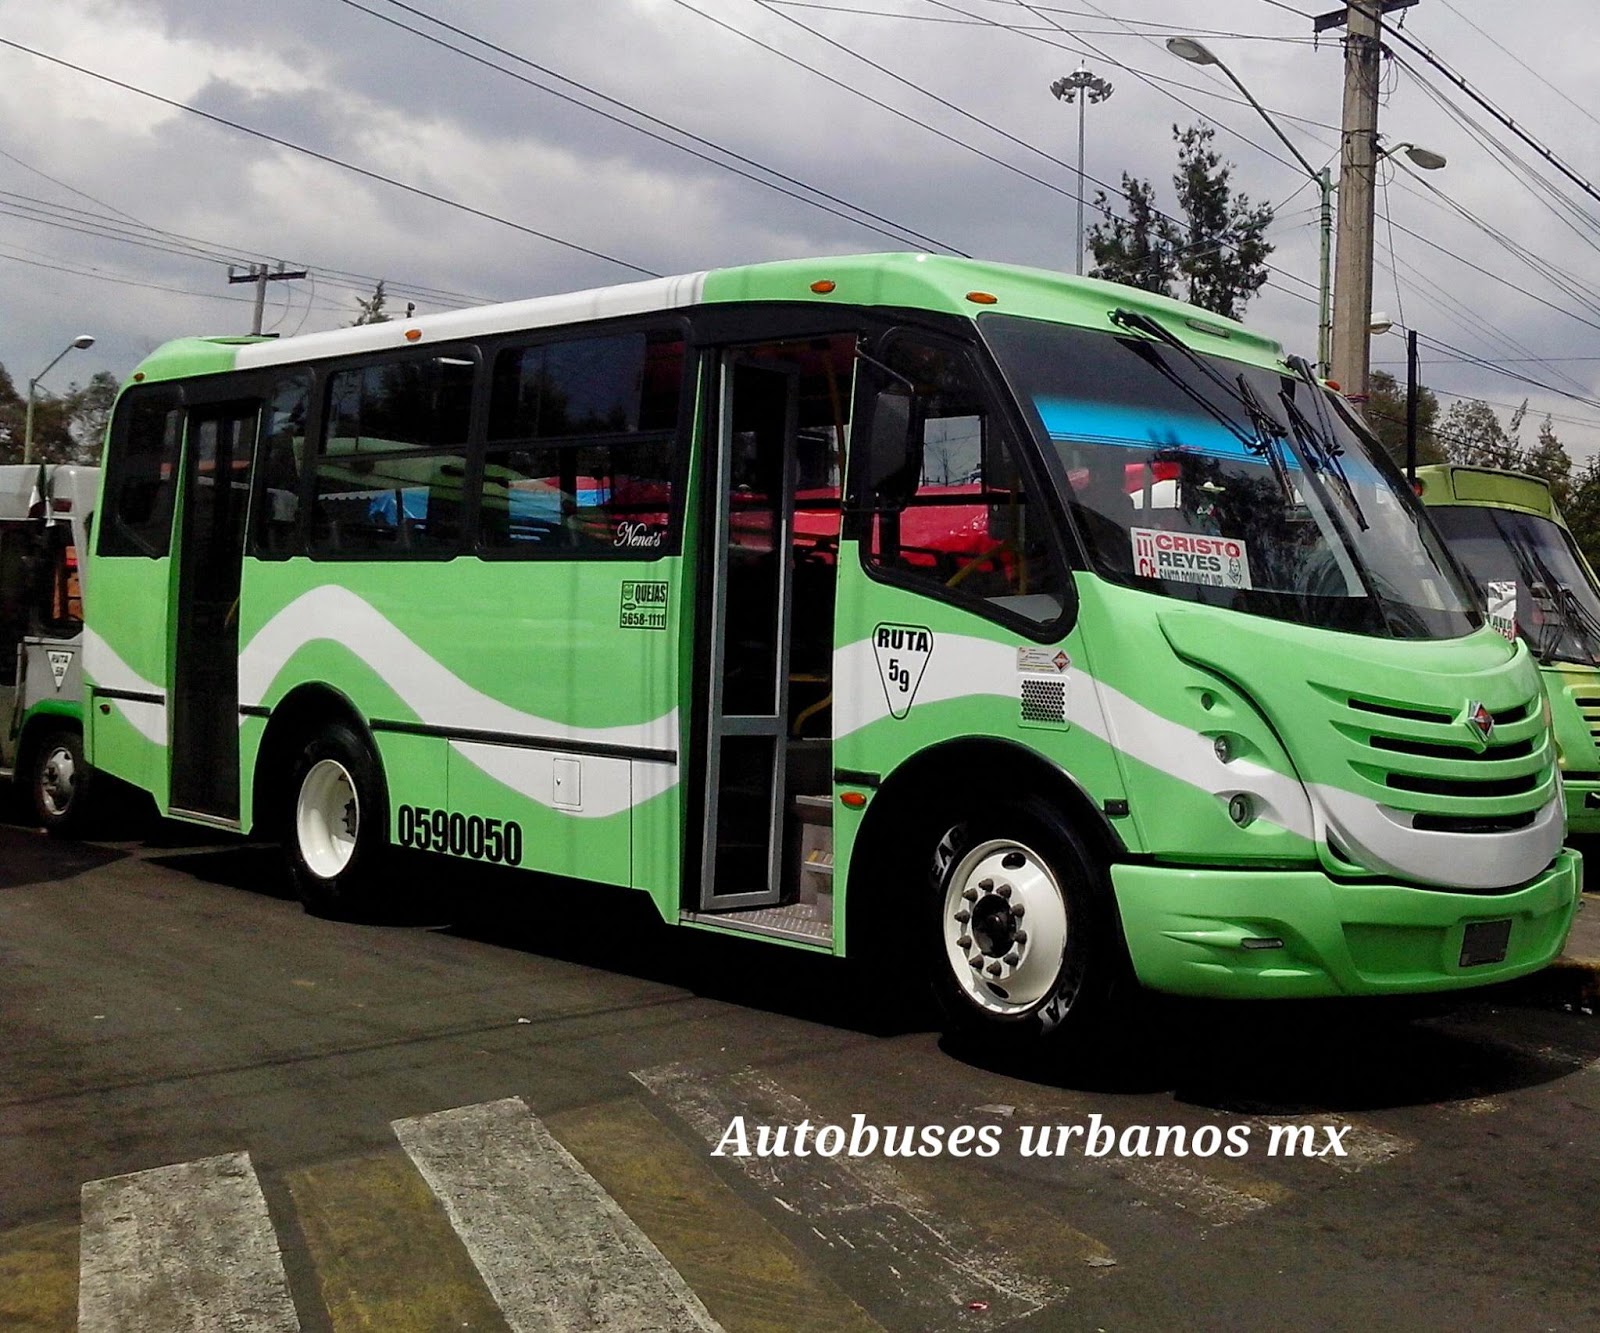 Transporte Pblico Autobuses Y Microbuses CDMX Internat